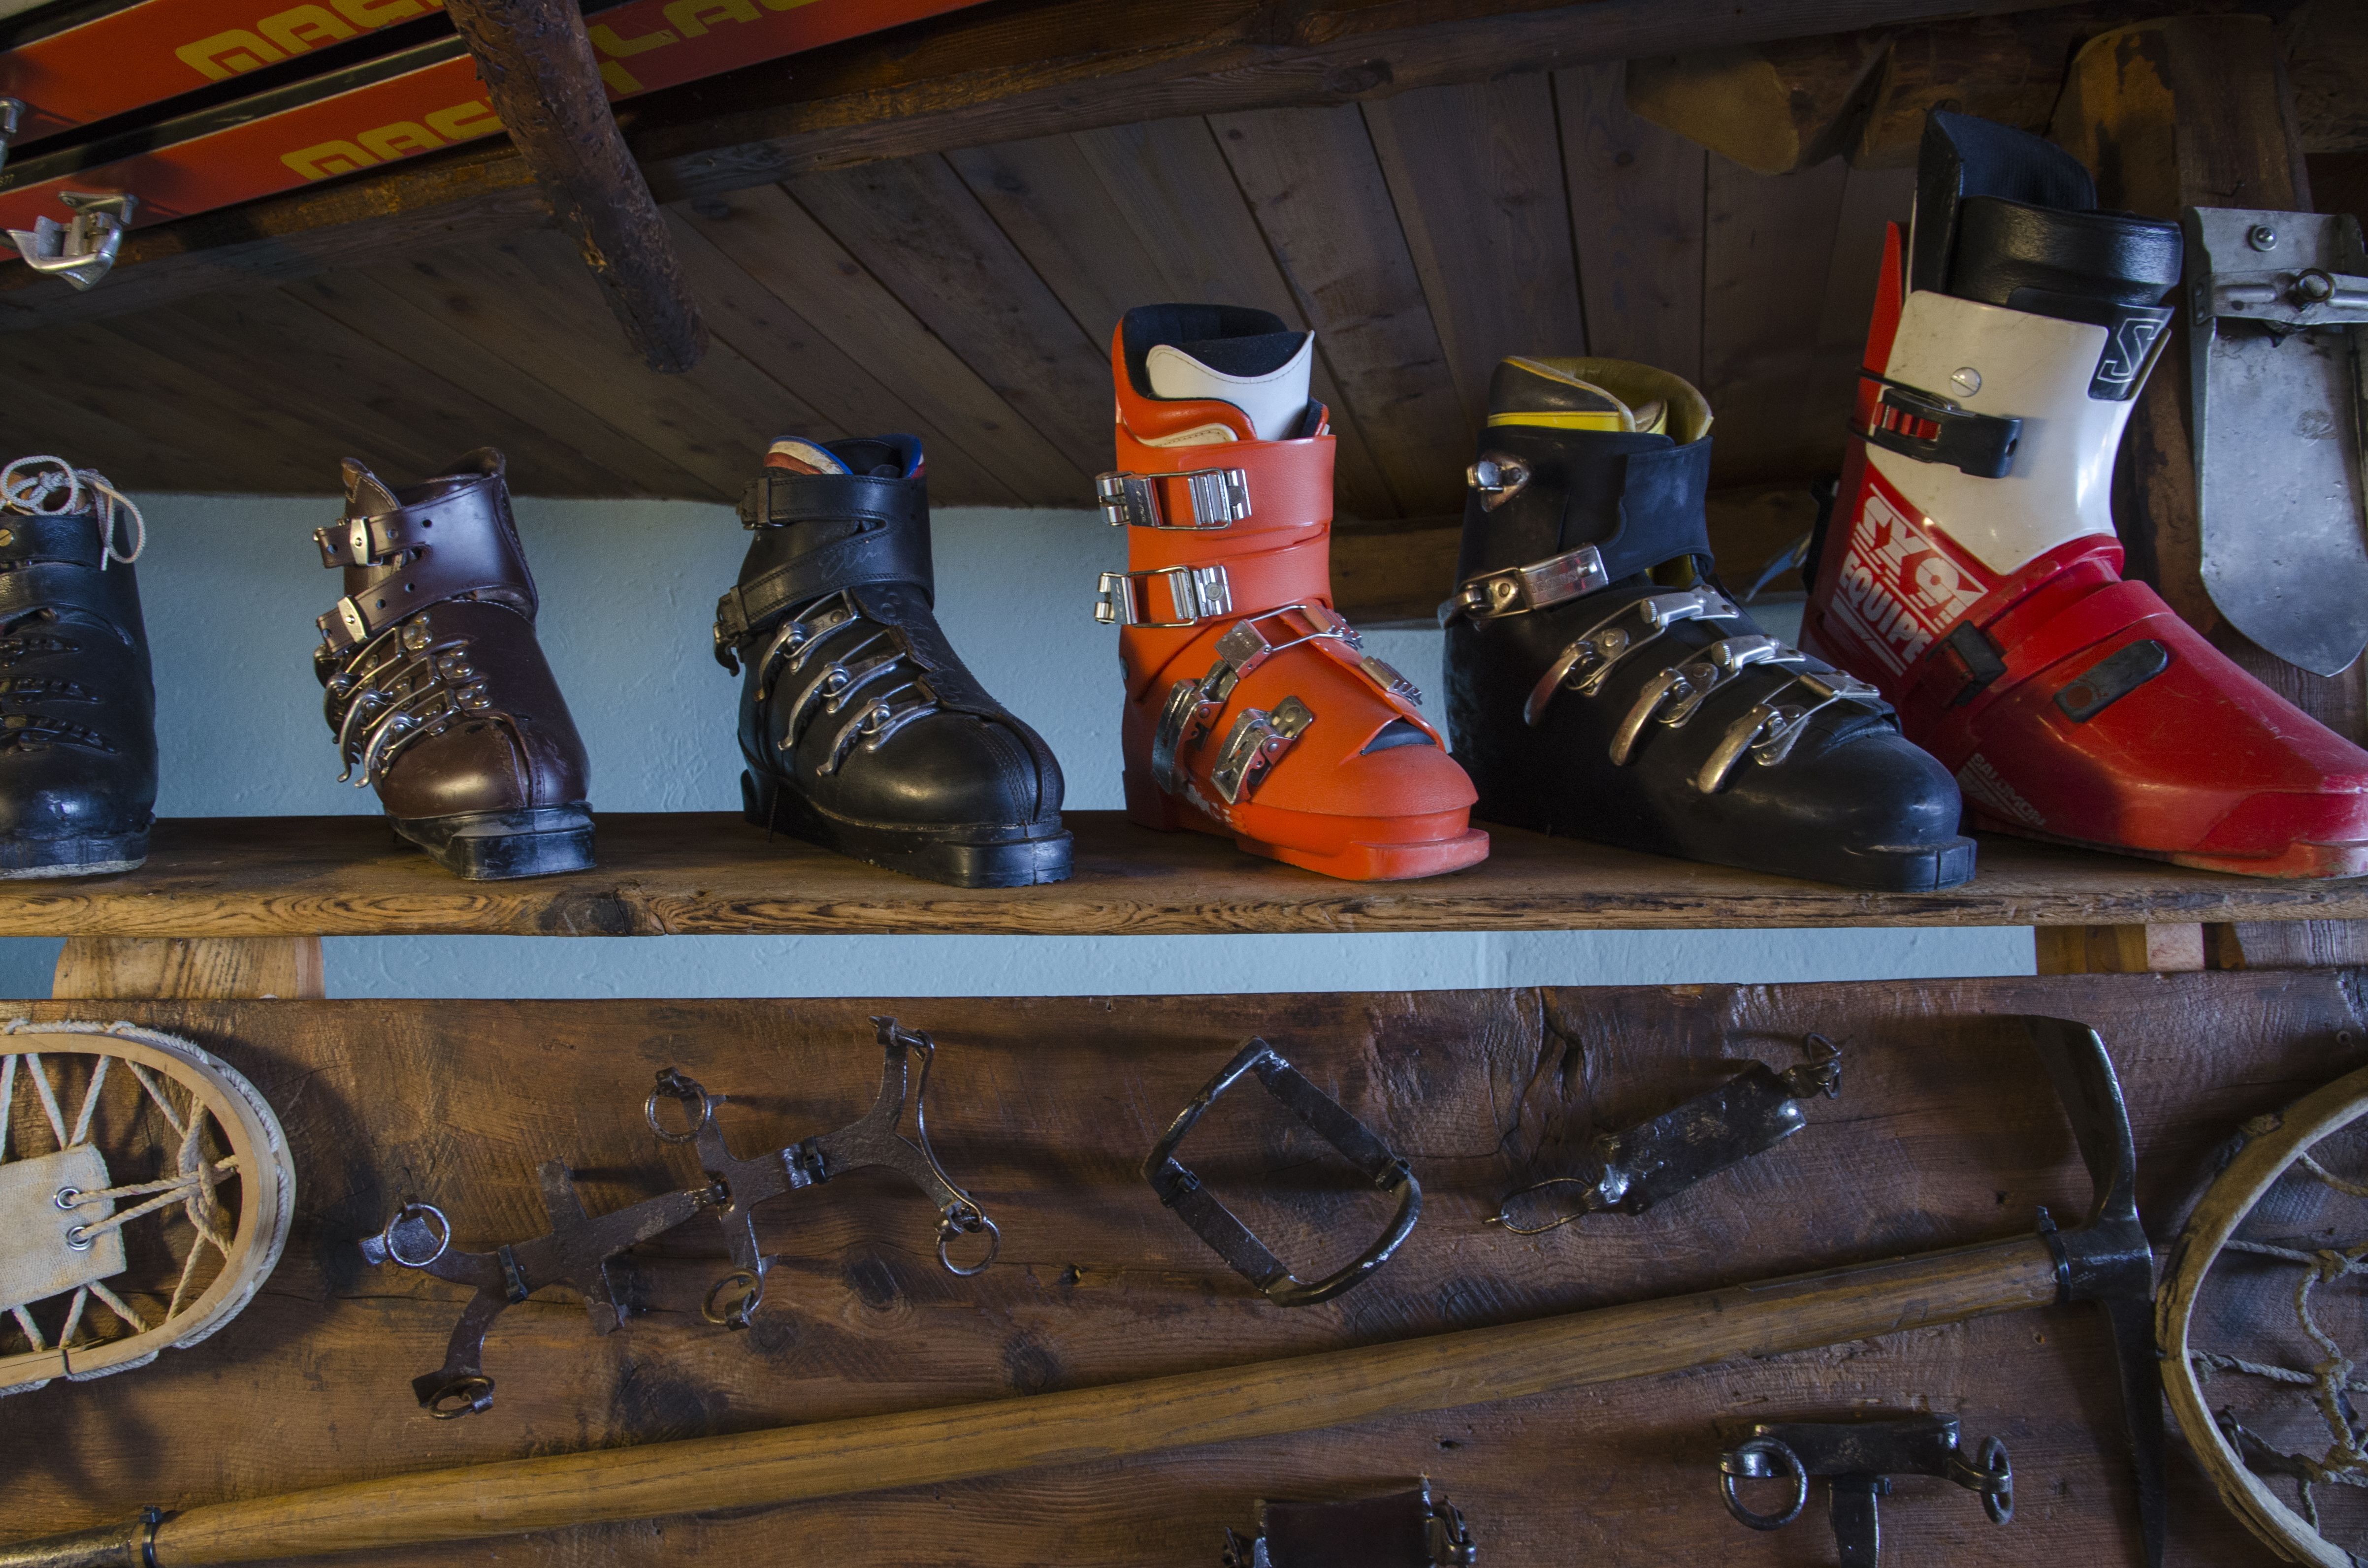 images of Ski lodge ski's museum.